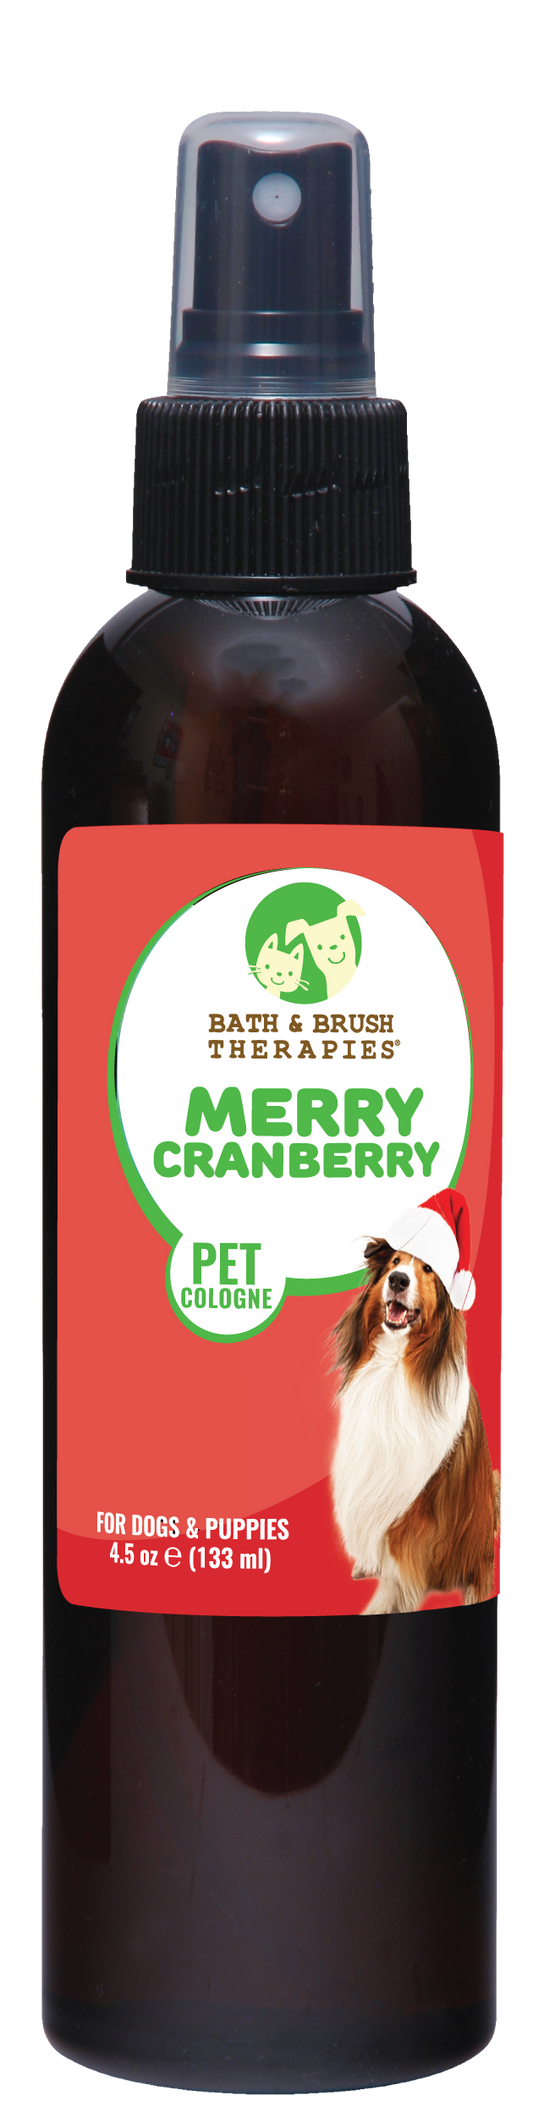 Merry Cranberry Pet Cologne | Bath & Brush Therapies®